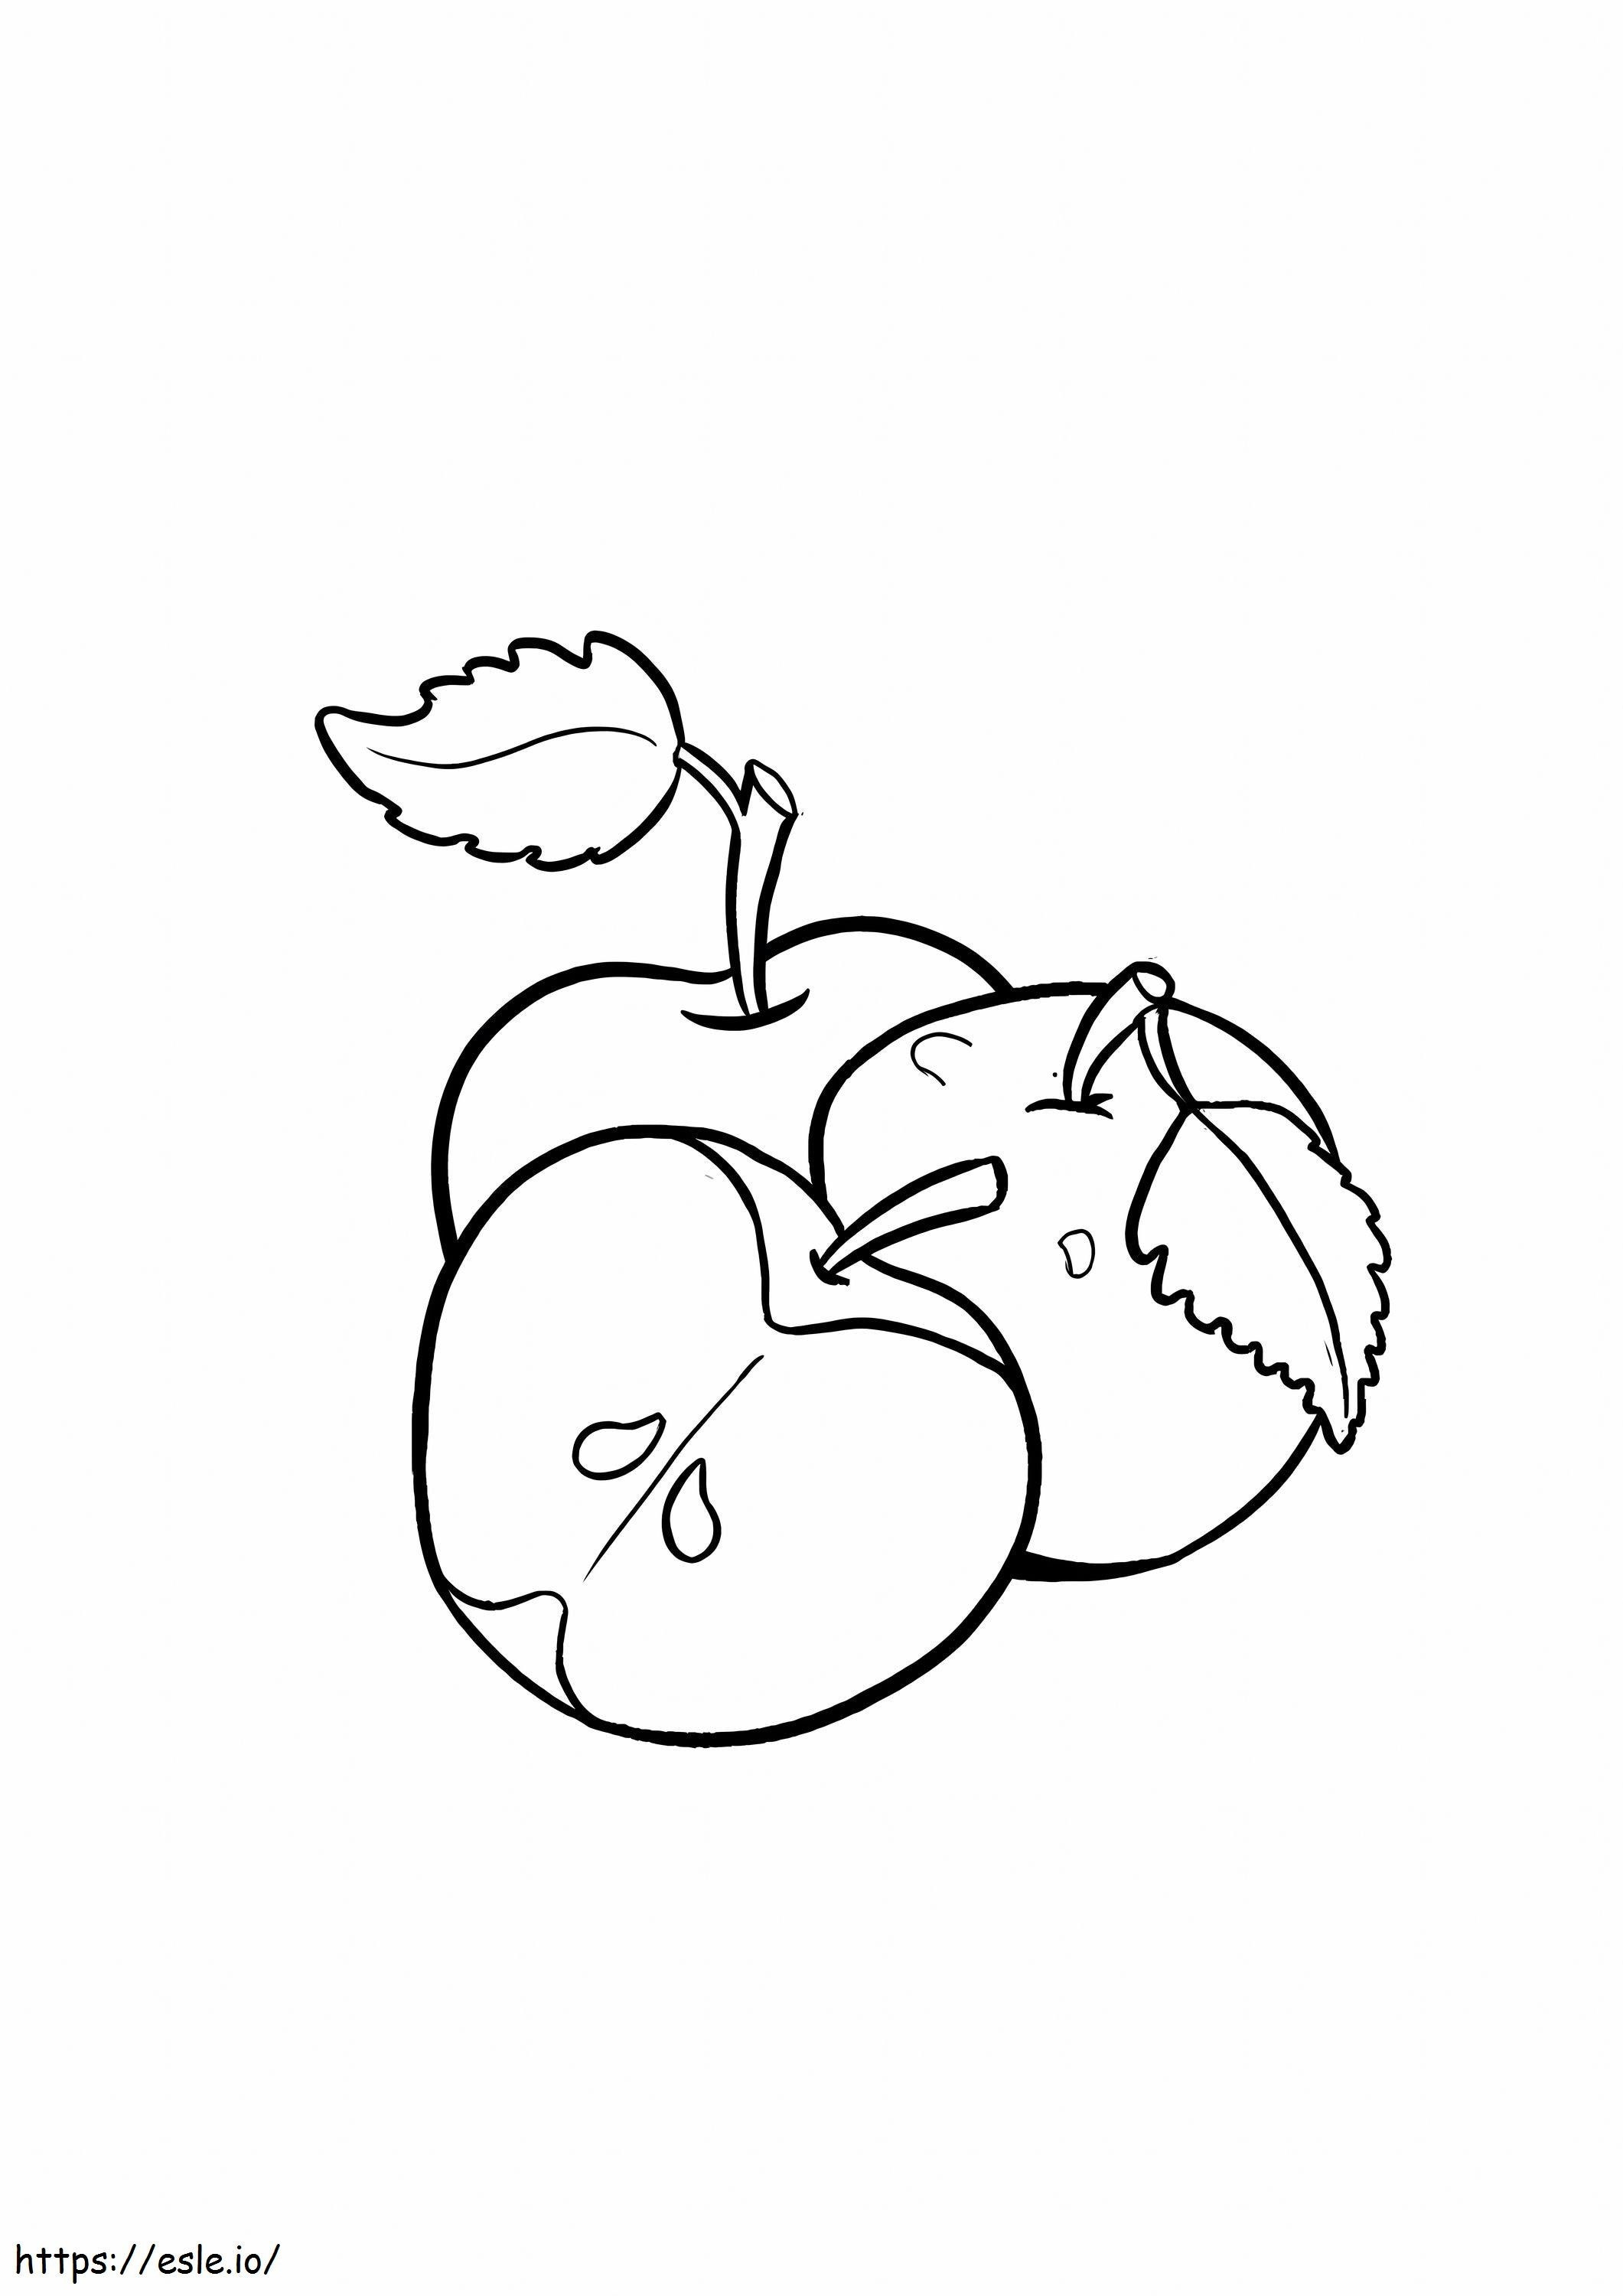 Elma dilimli iki elma boyama